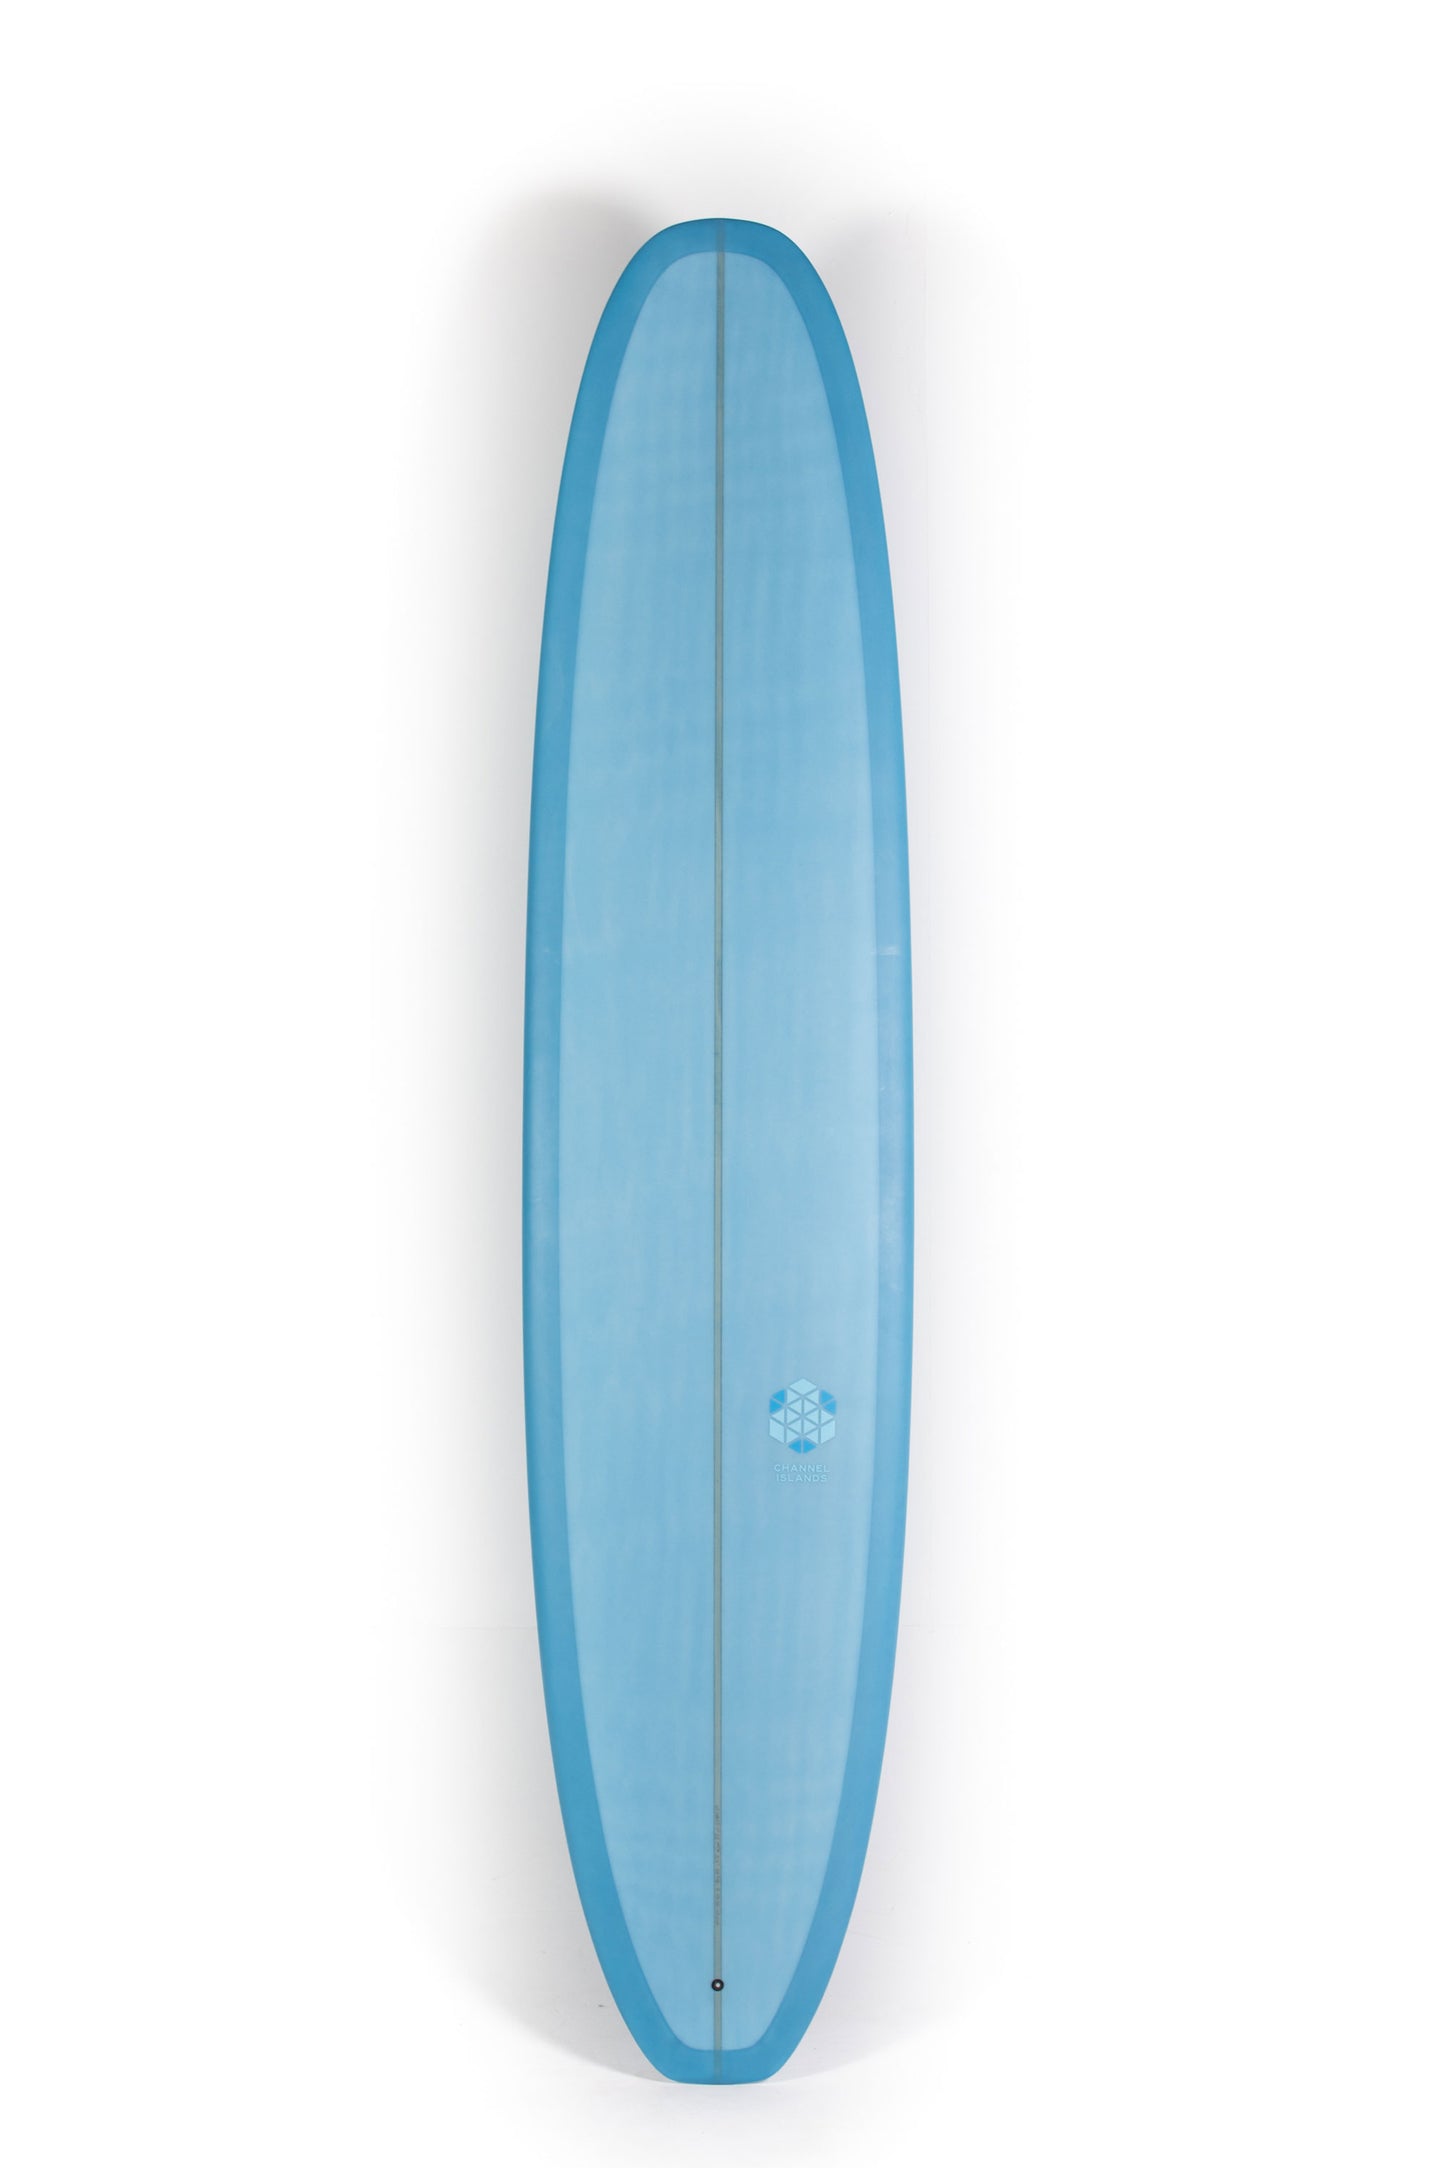 Pukas Surf Shop - Channel Islands - CI LOG by Al Merrick - 9'0" x 22 5/8 x 3 - 70.4L - CI28625